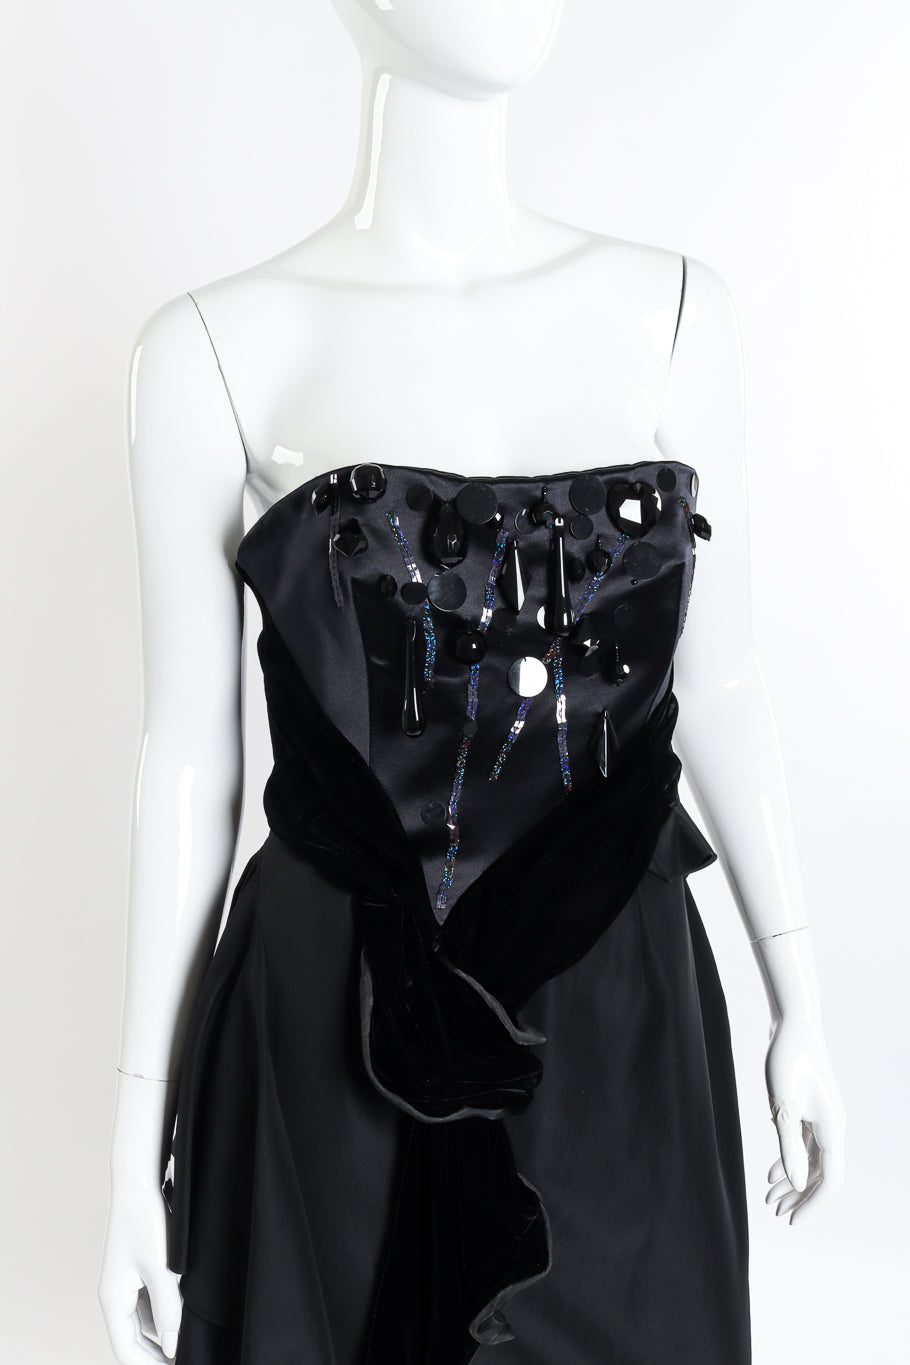 Vintage Christian Lacroix Beaded Strapless Gown front on mannequin closeup @recessla